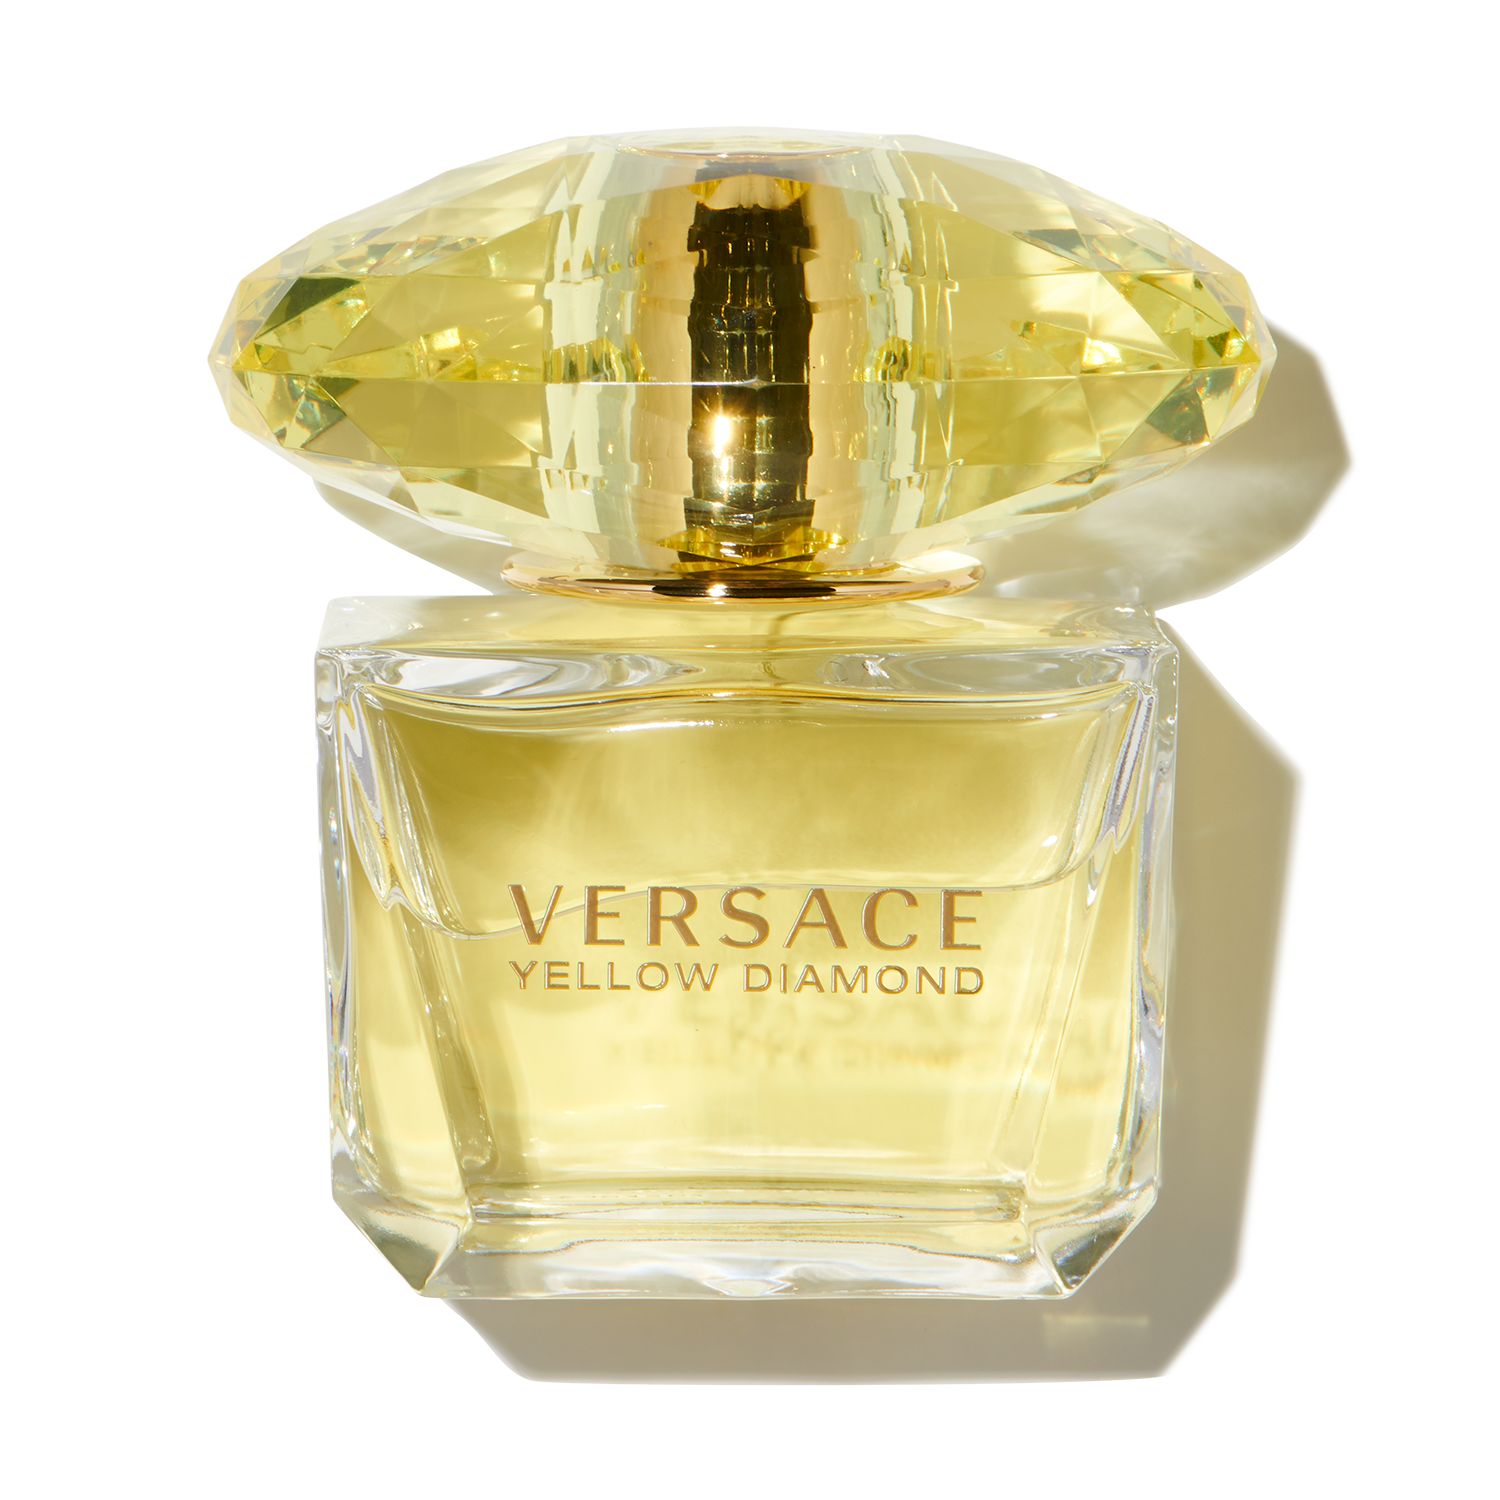 Buy Versace Yellow Diamond at Scentbird for $16.95